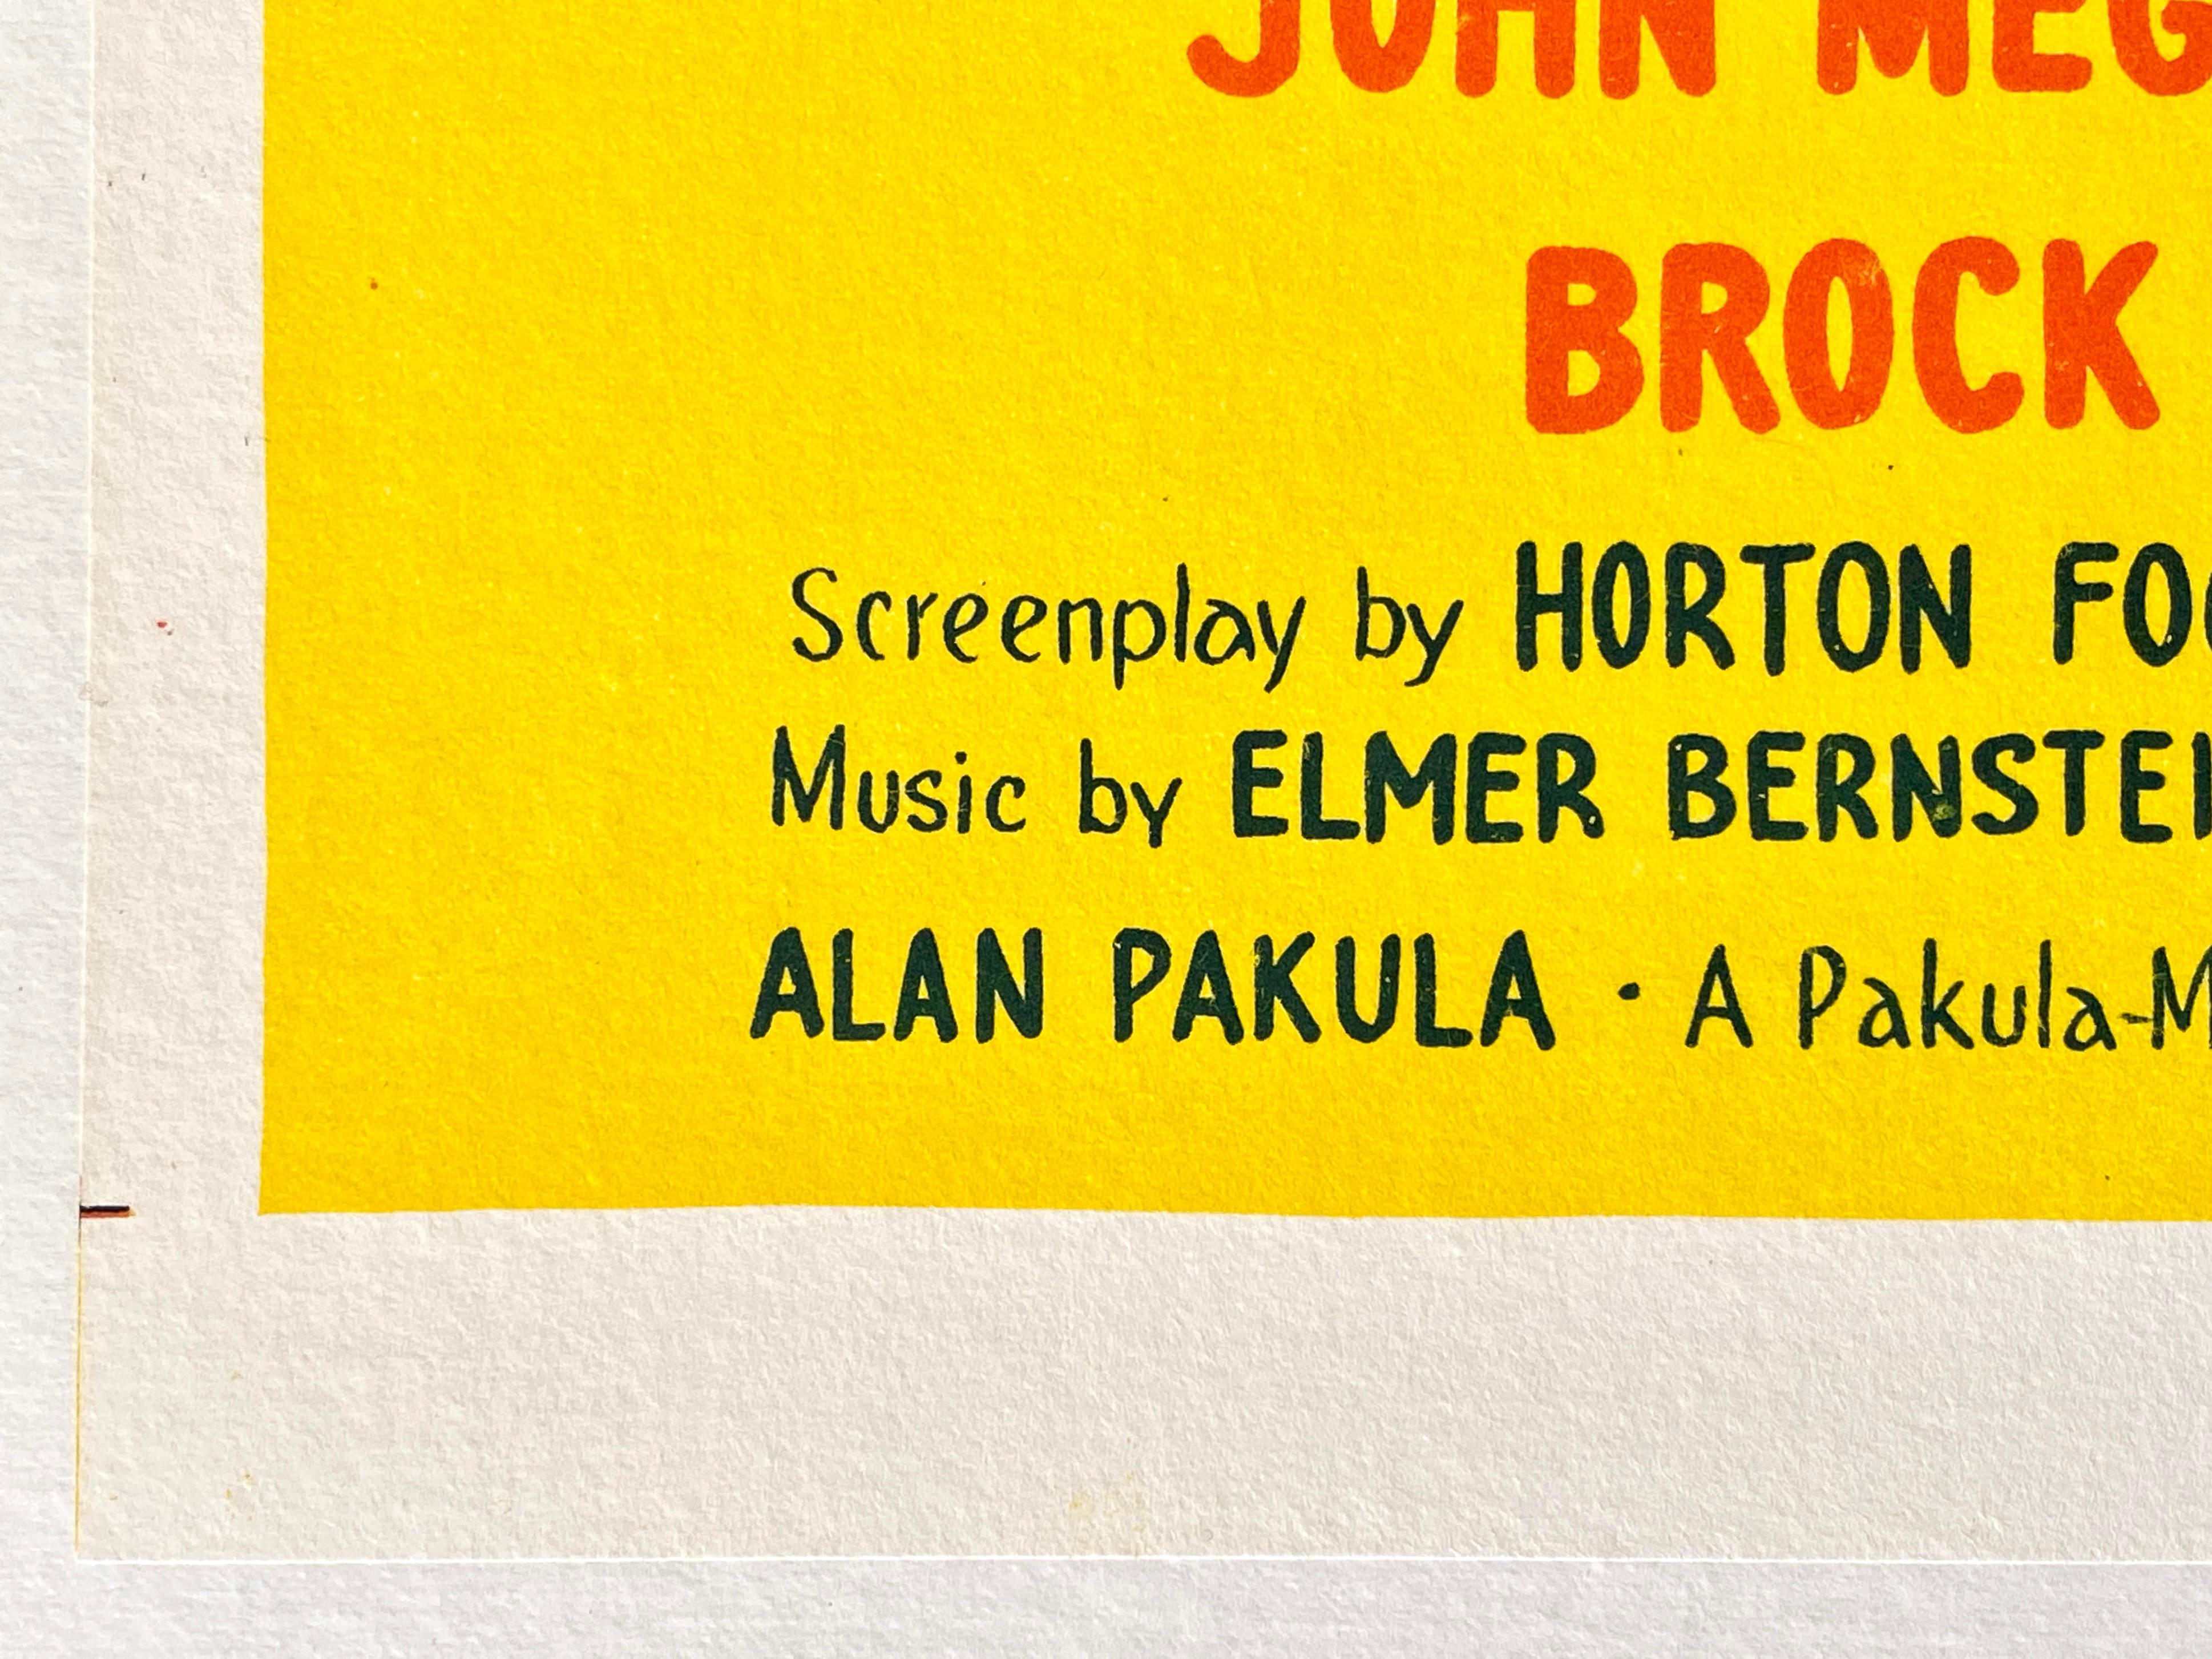 'To Kill a Mockingbird' Original Vintage Australian Daybill Movie Poster, 1964 For Sale 2